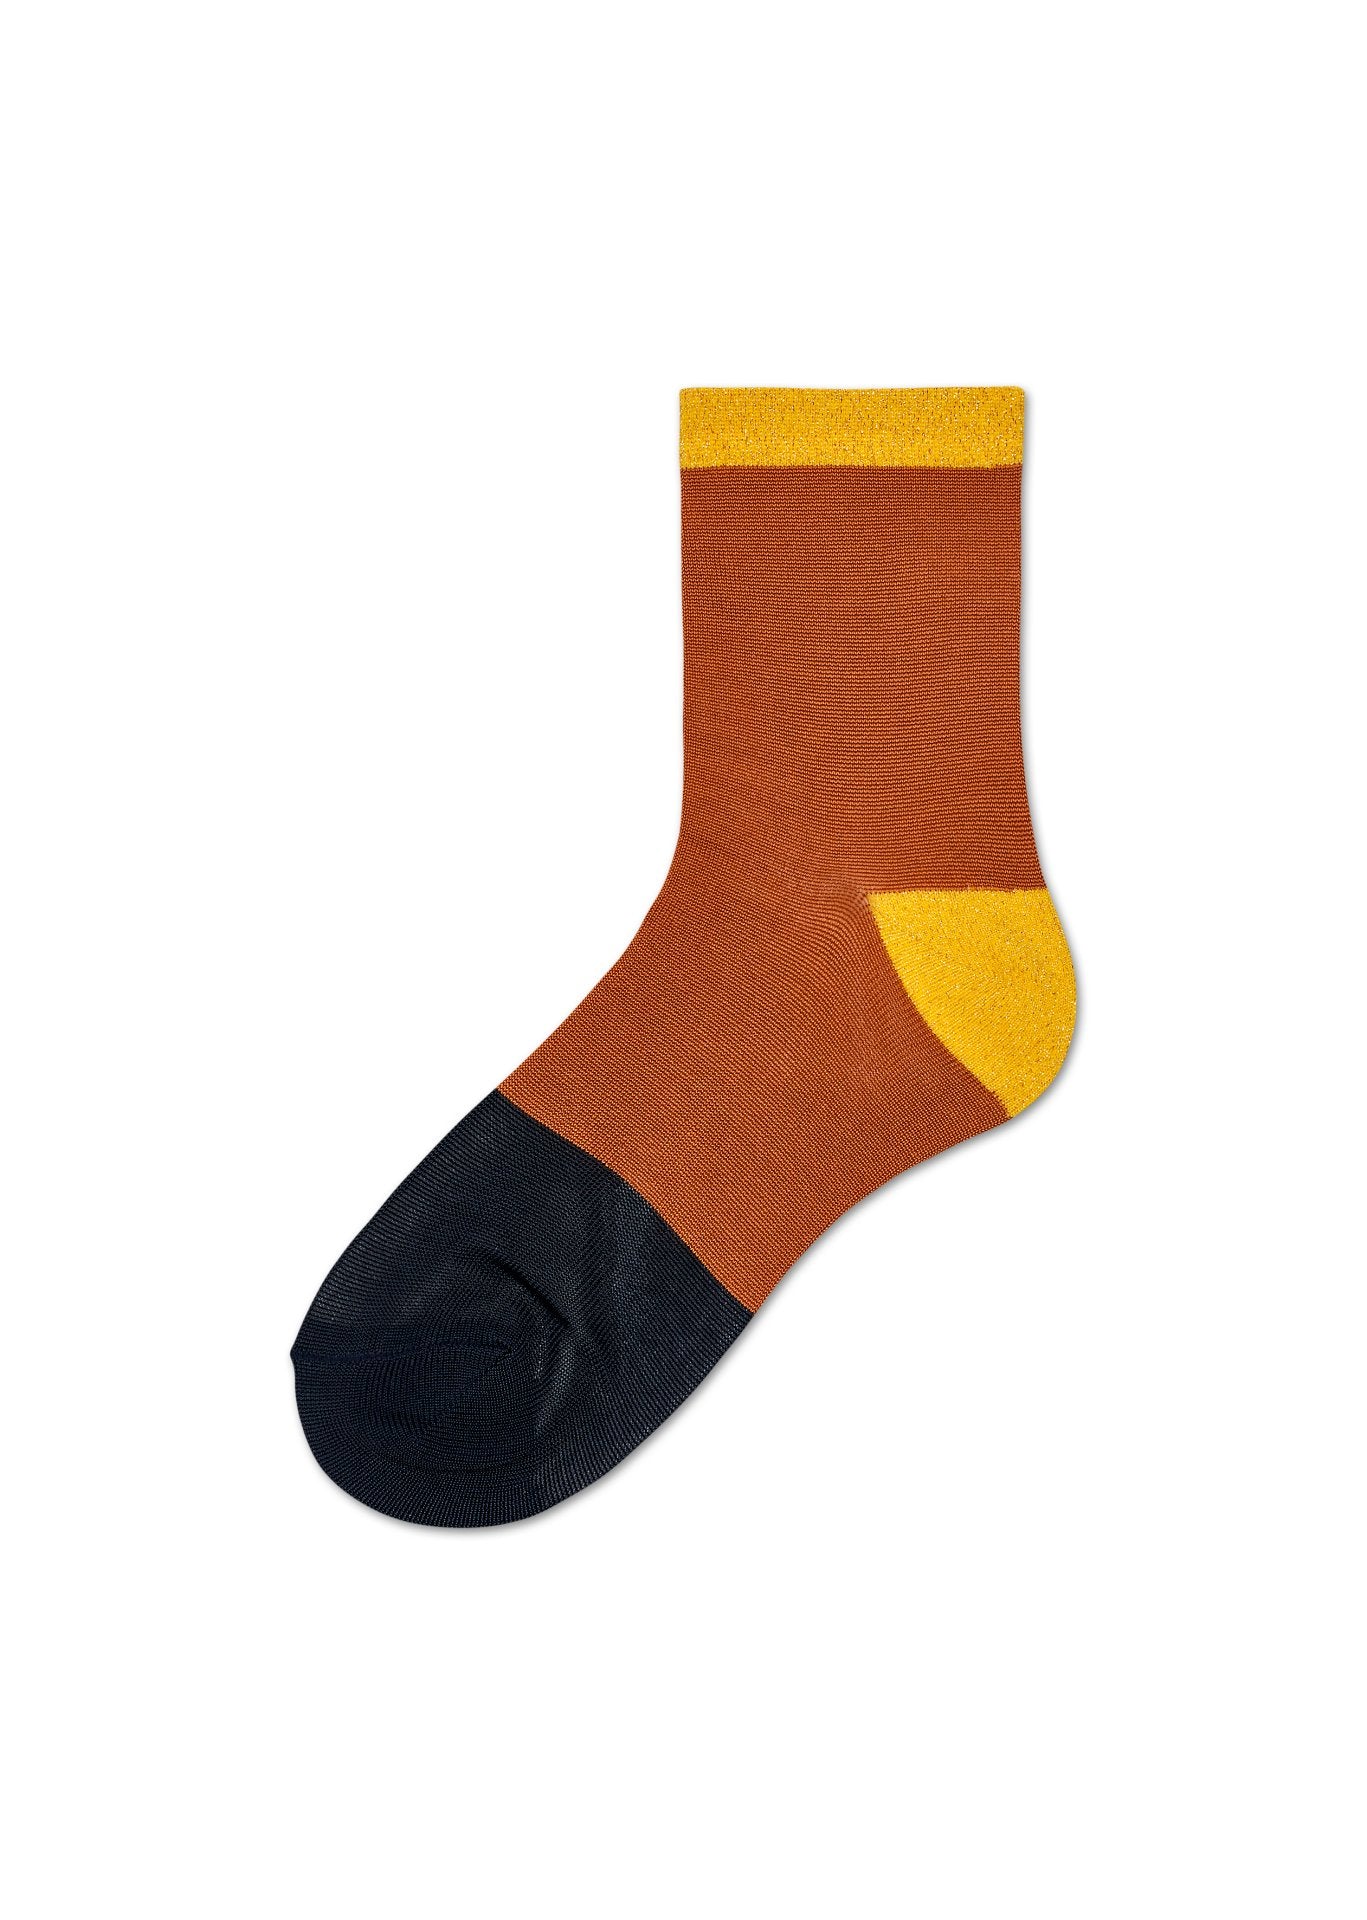 Dámské oranžovo-černé ponožky Happy Socks Liza // kolekce Hysteria